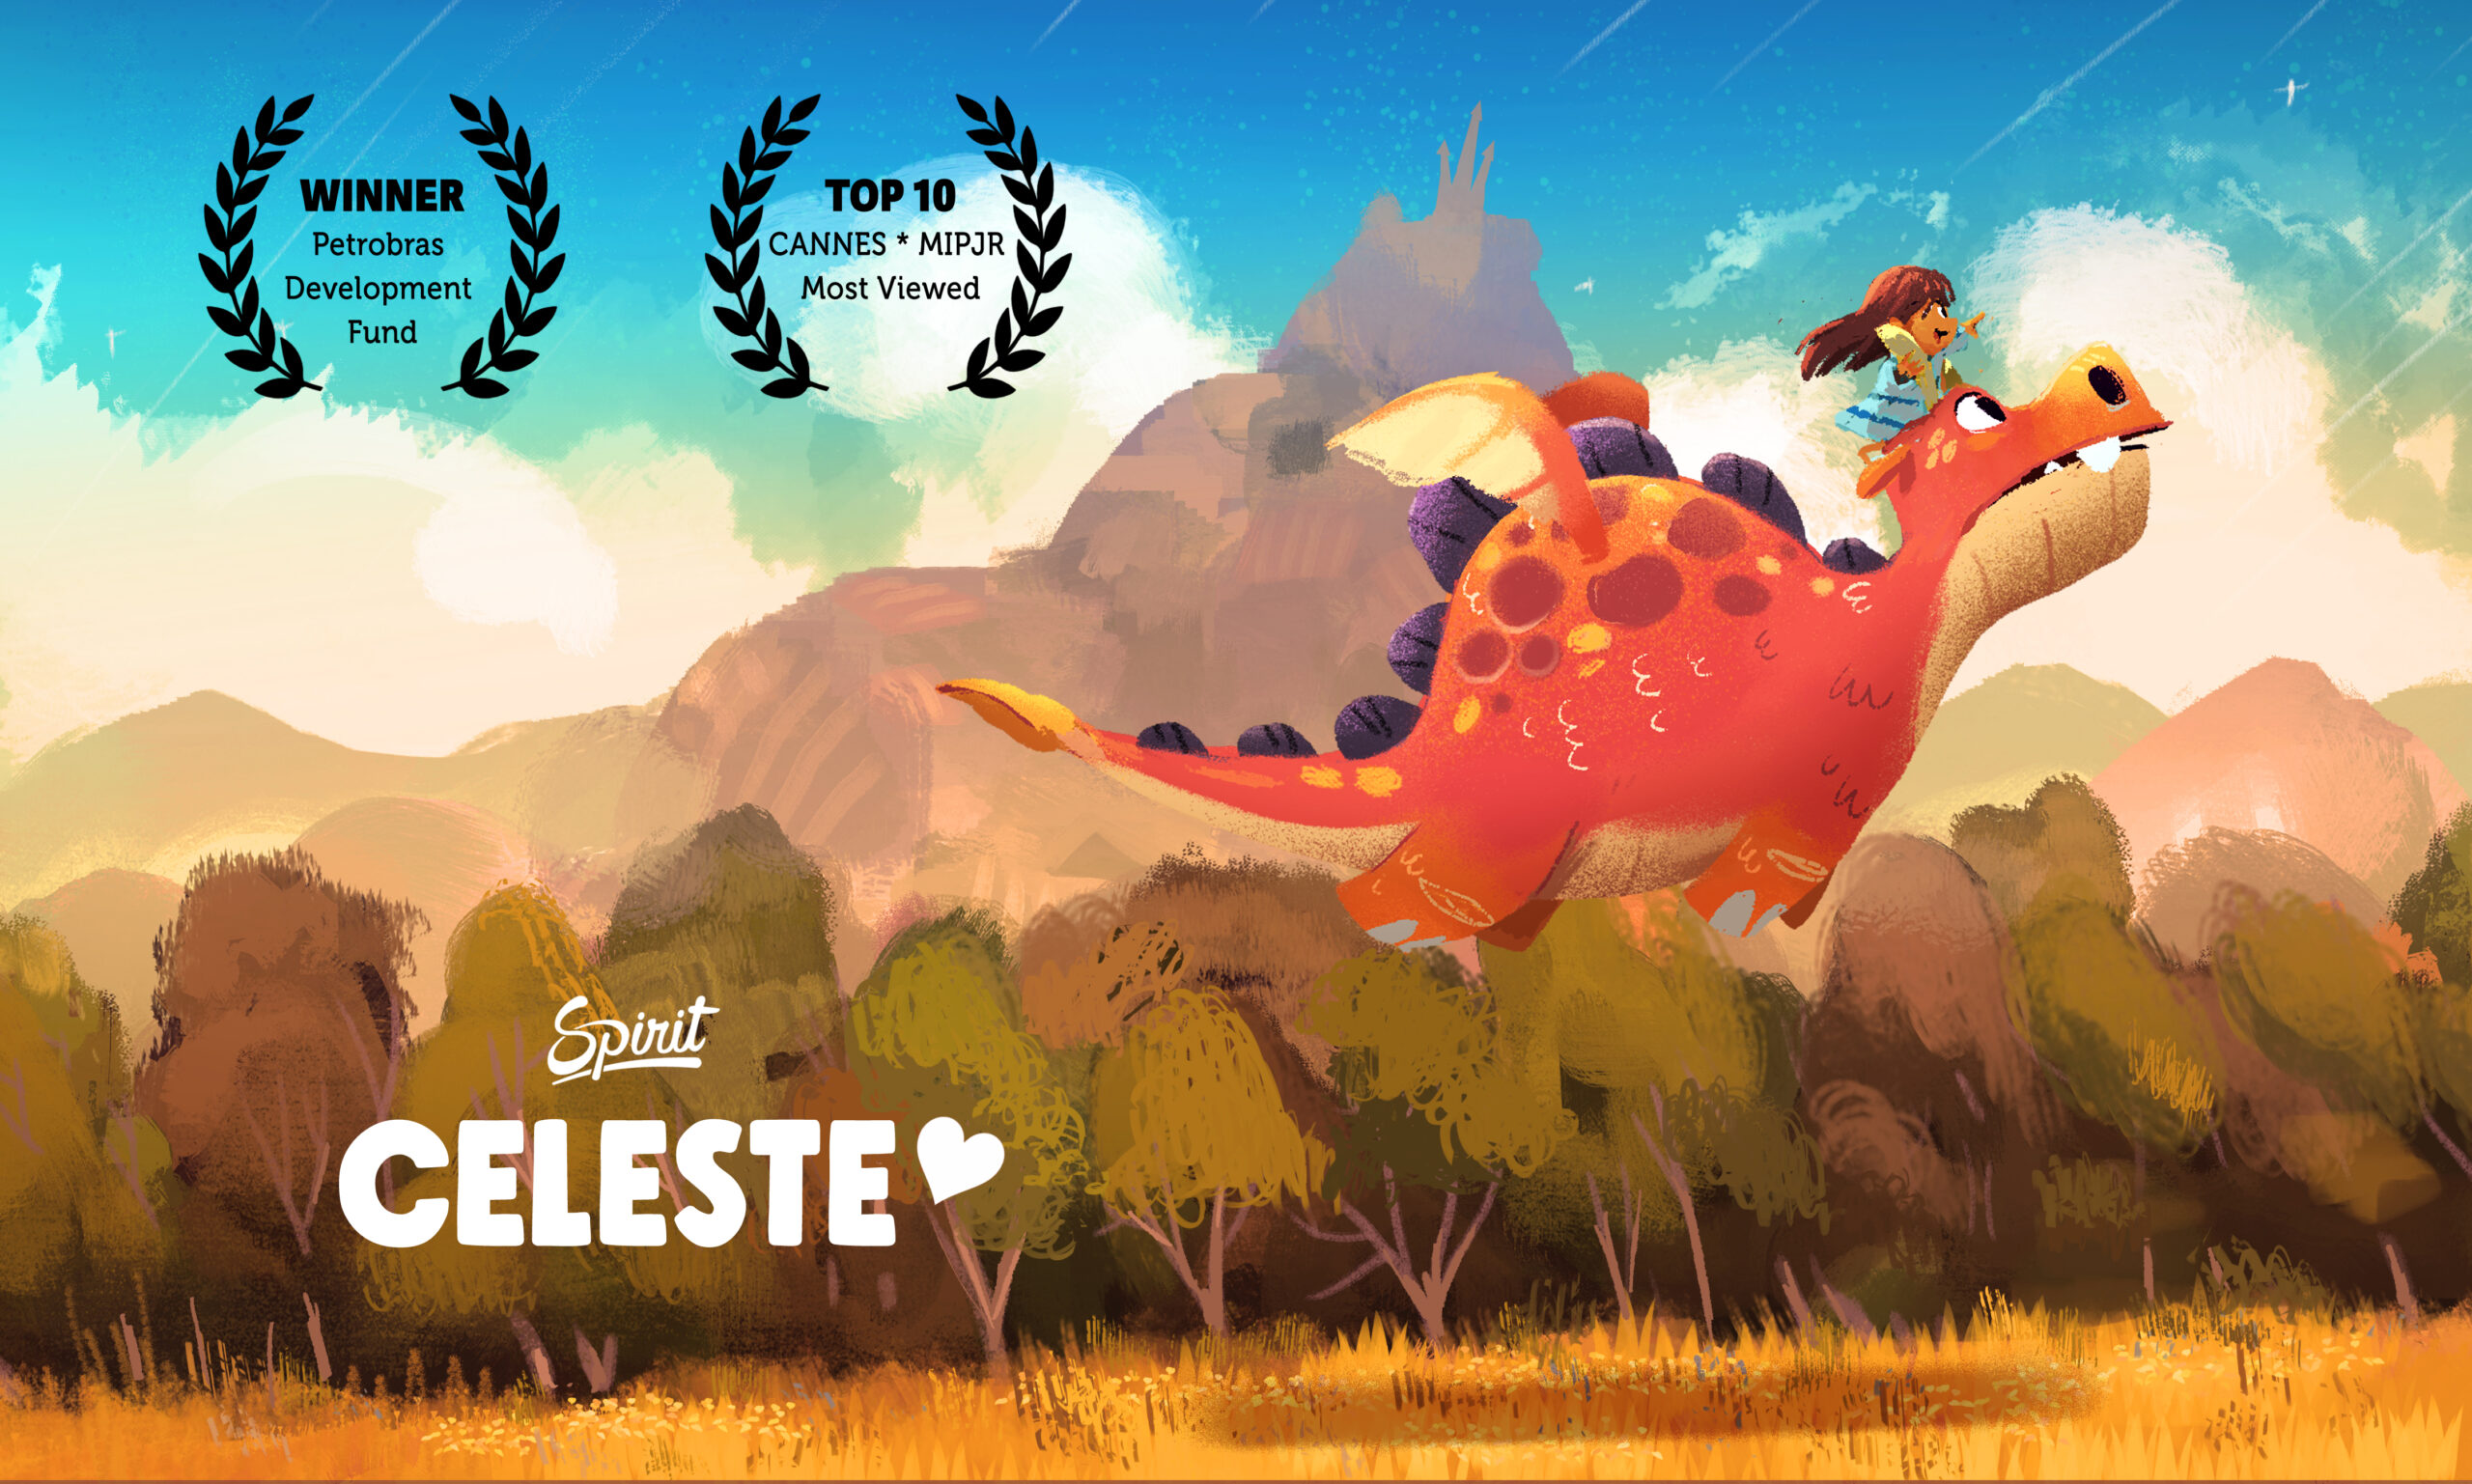 CELESTE - Spirit Animation Studios